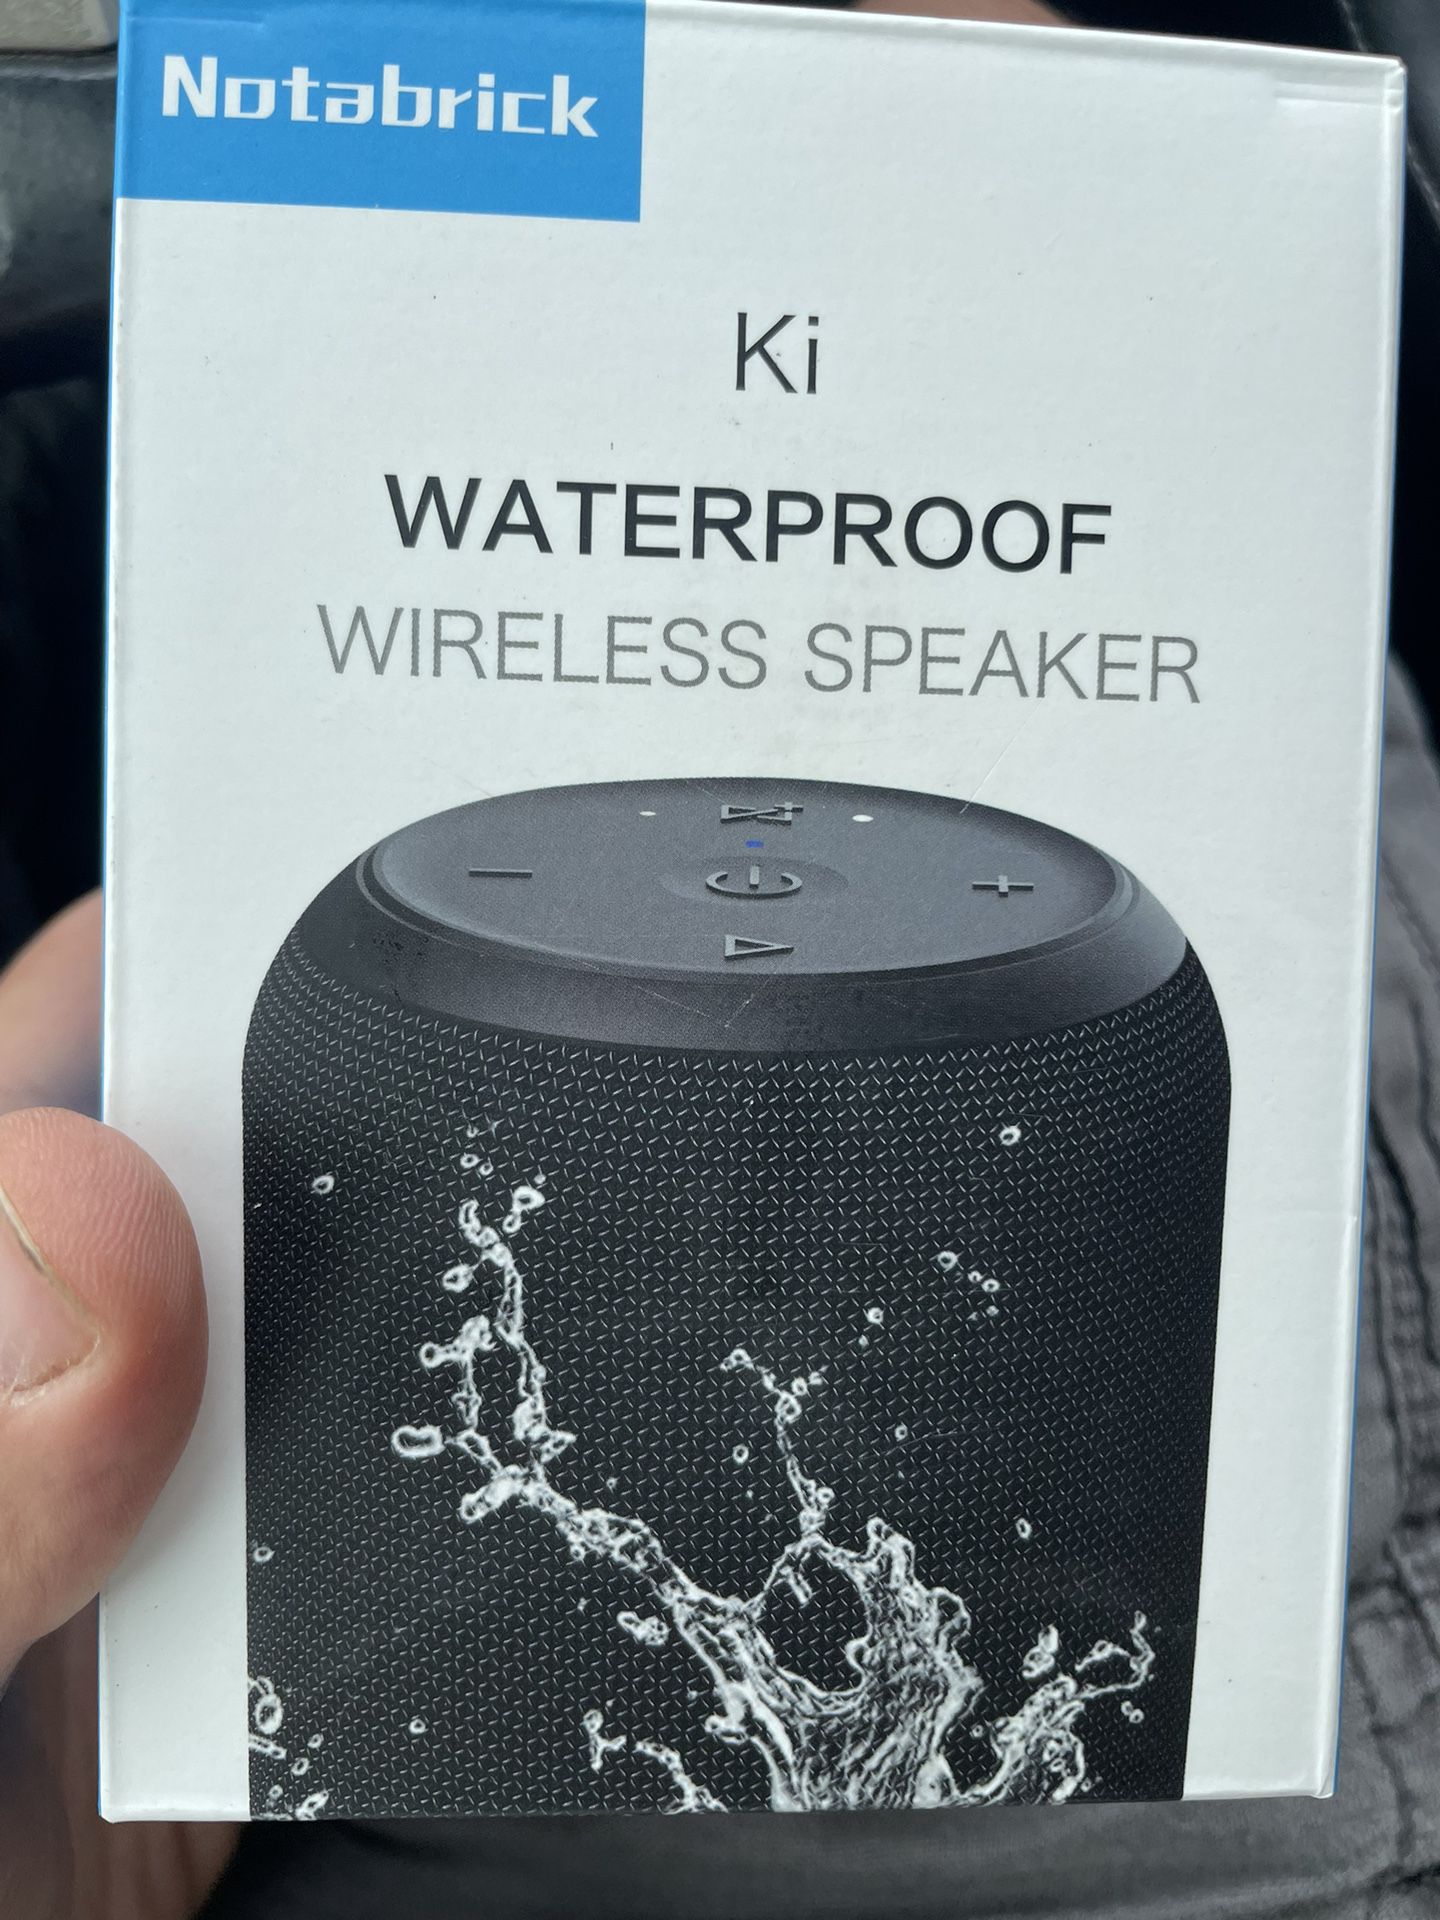 Wireless Speaker Waterproof Notabrick Ki brand new inbox. Pick up or delivery. As is. 